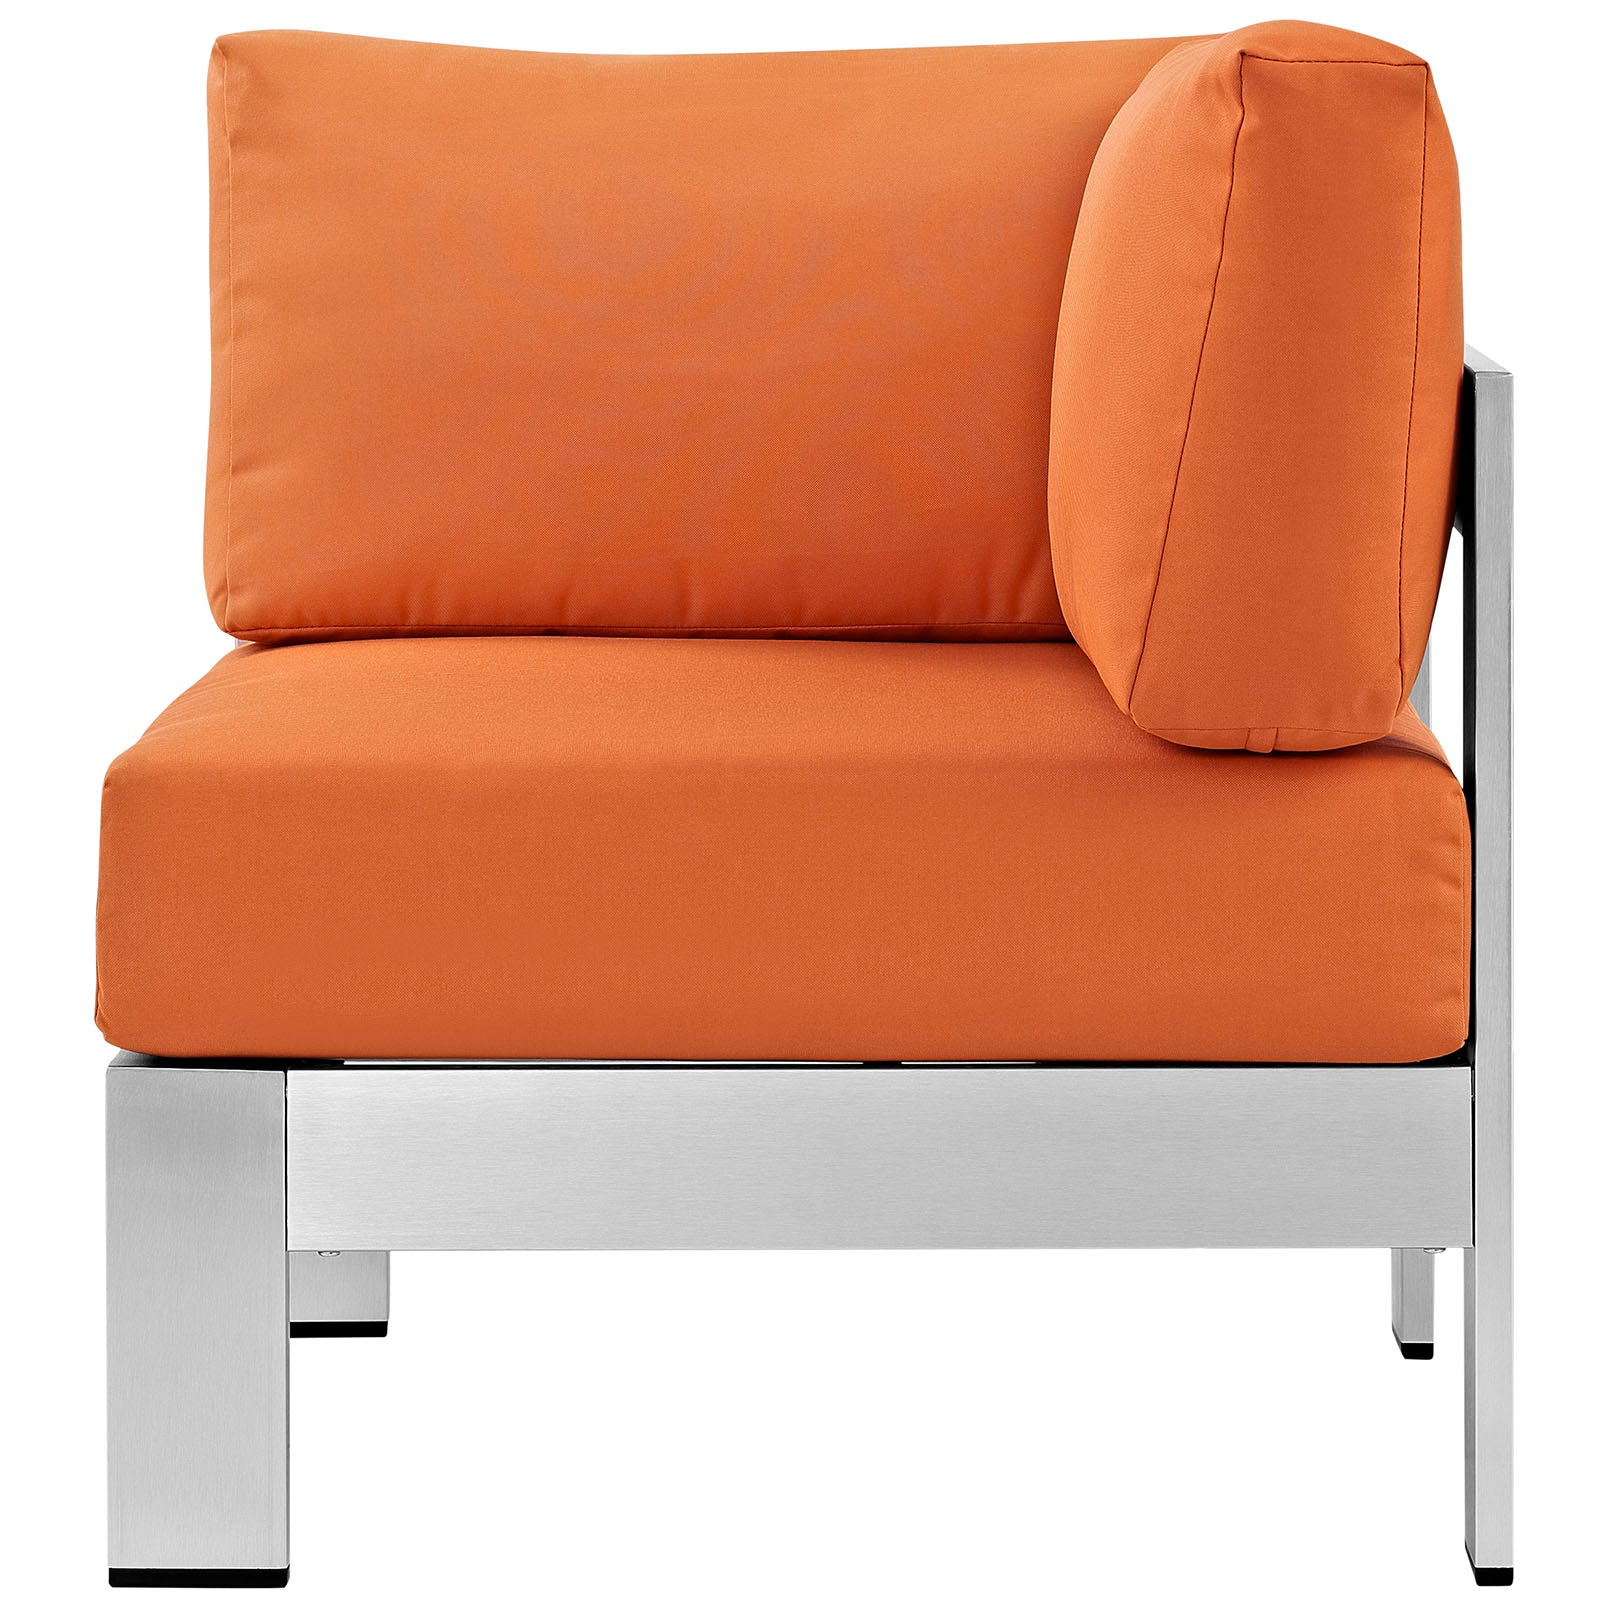 Modway Outdoor Chairs - Shore Outdoor Patio Aluminum Corner Sofa Silver Orange